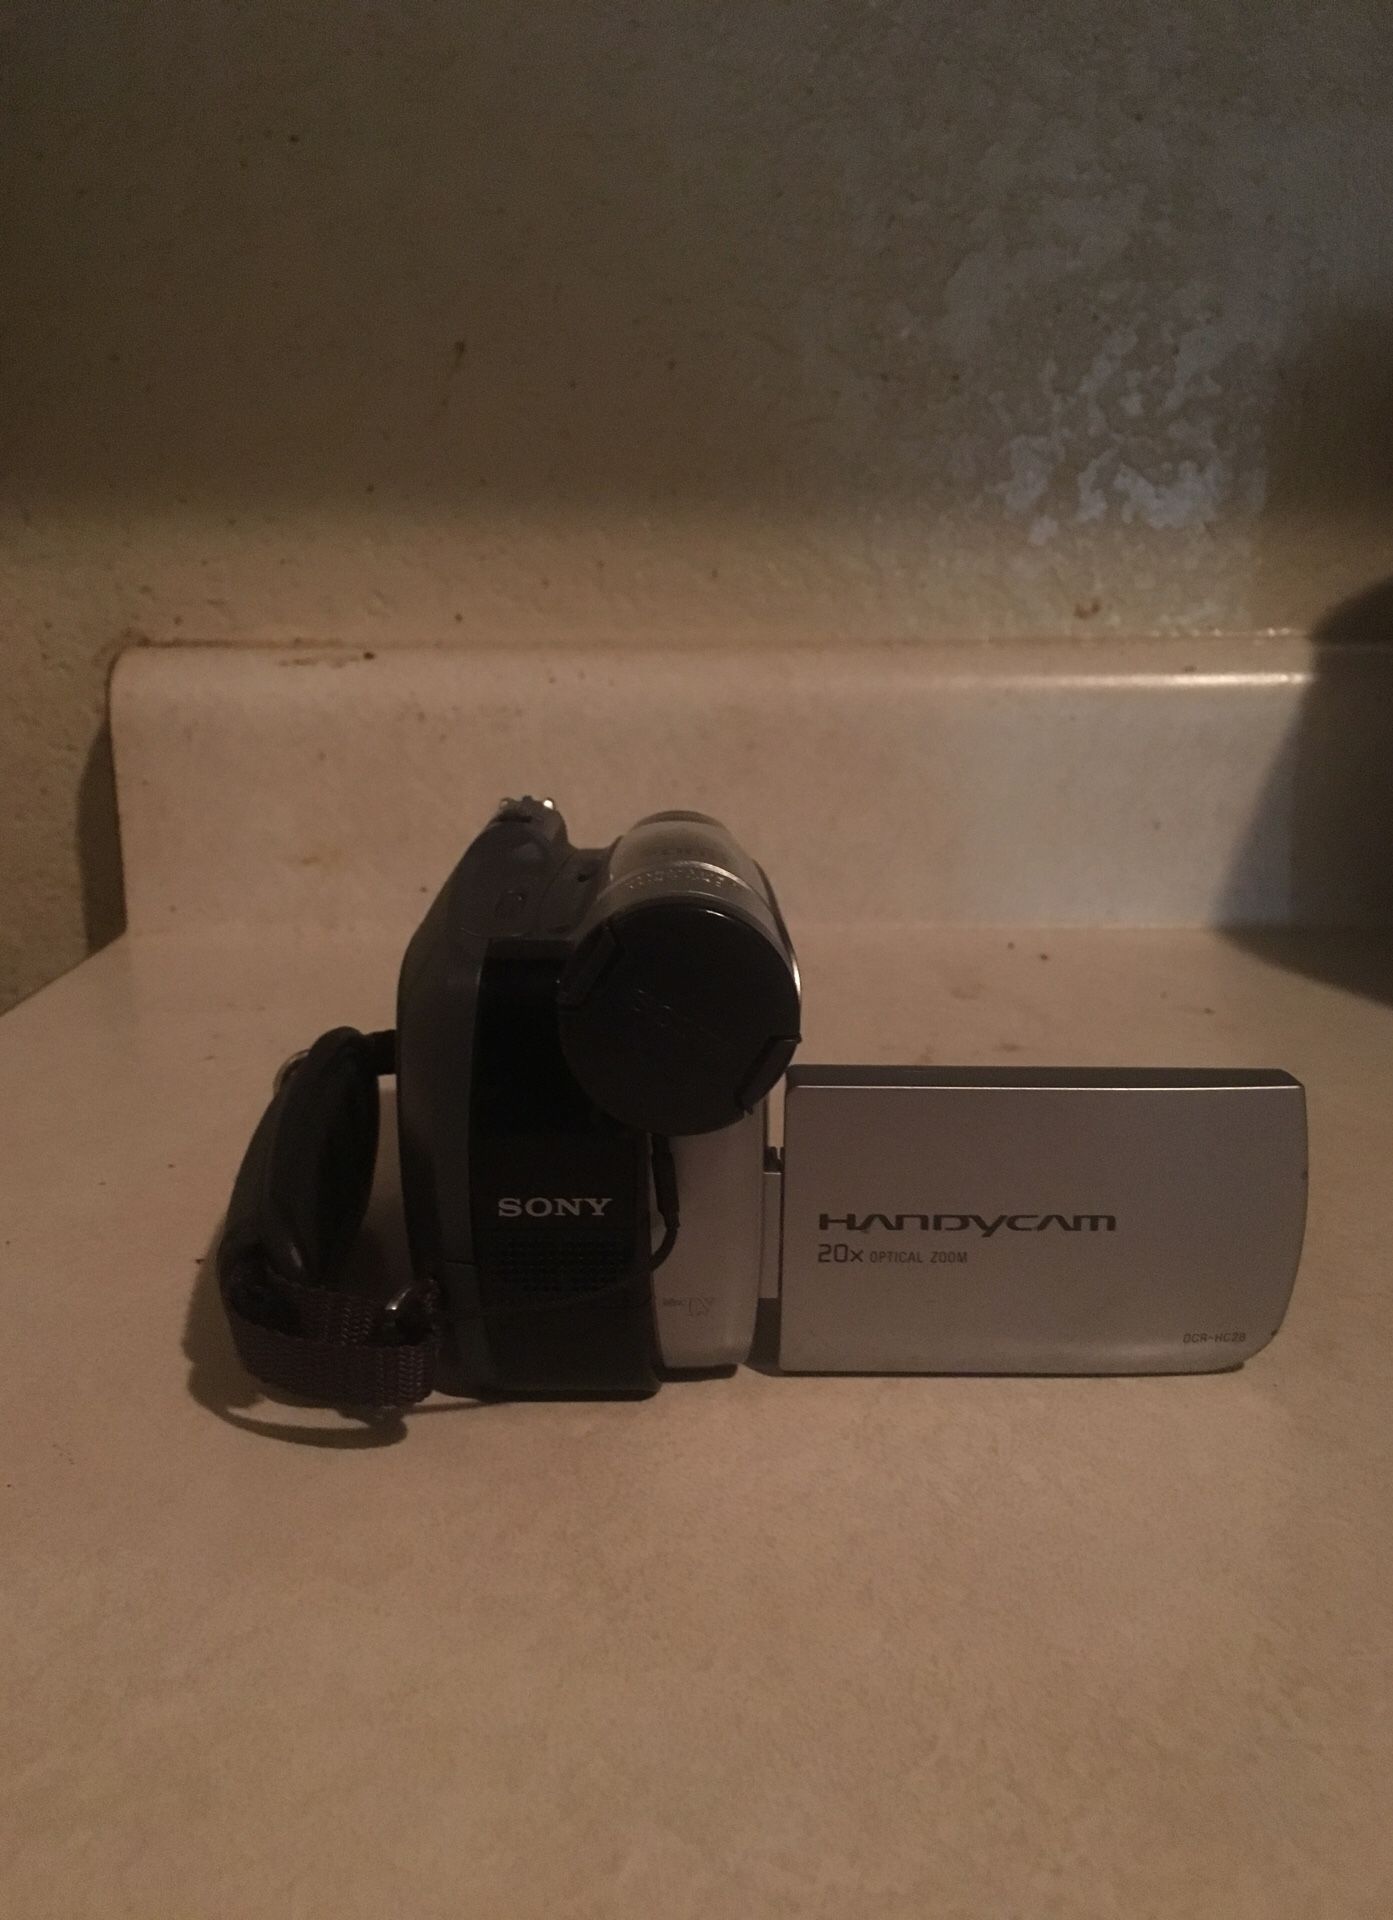 Sony digital zoom camcorder